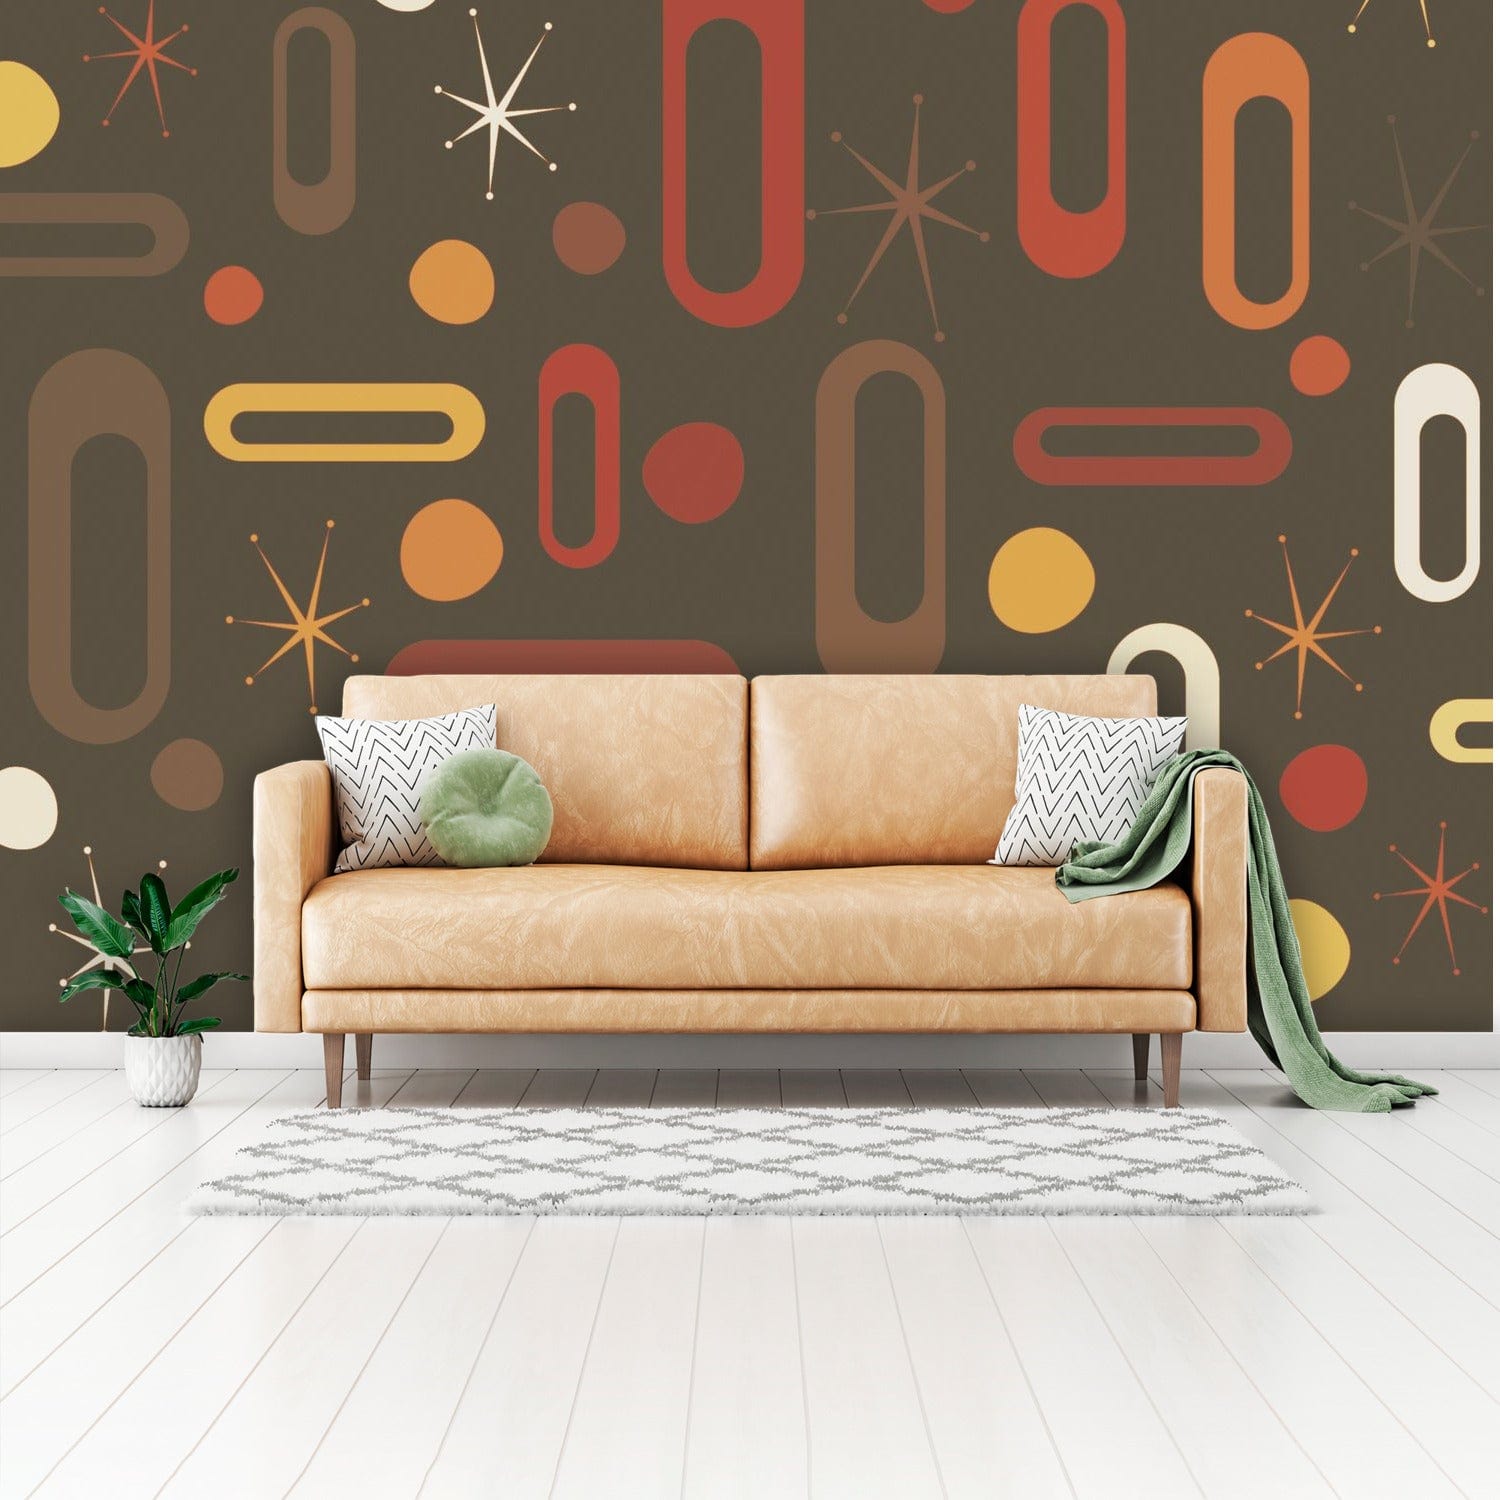 Mid Century Modern Wallpaper, Peel And Stick, Chocolate Brown, Atomic Starburst Wall Murals Wallpaper H110 x W160